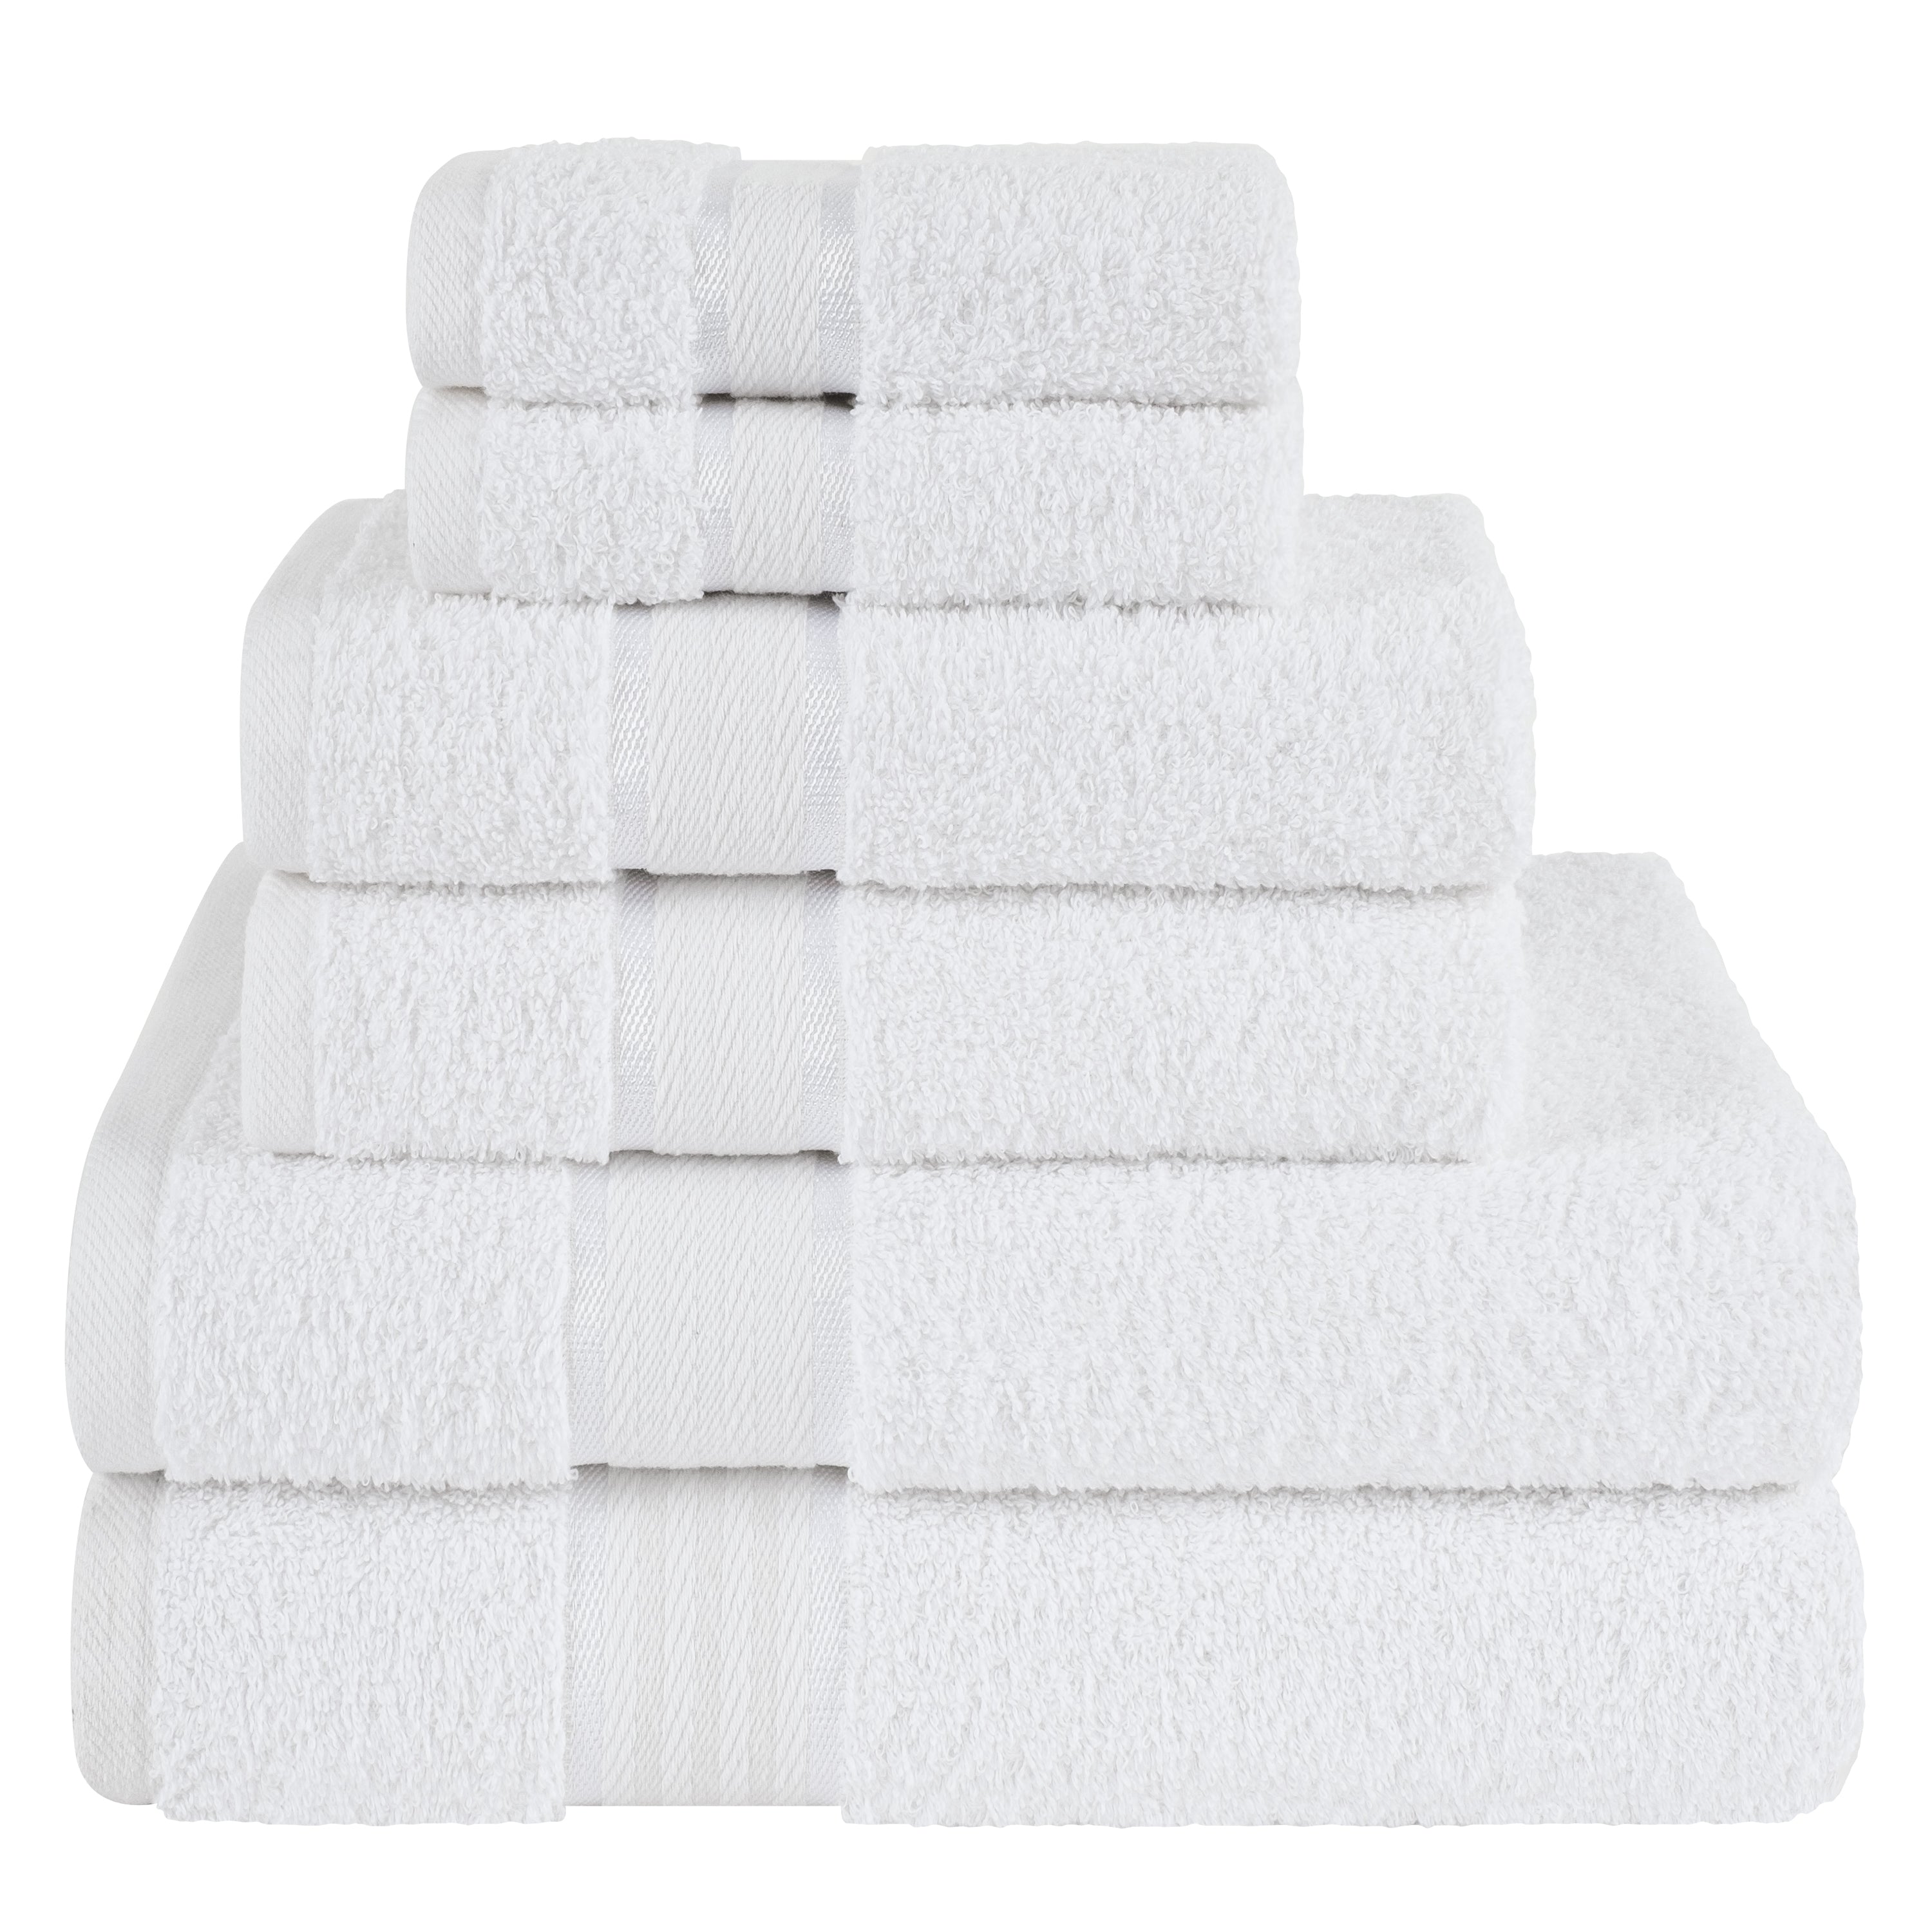 American Soft Linen - Salem 6 Piece Turkish Cotton Luxury Towel Set - White - 0